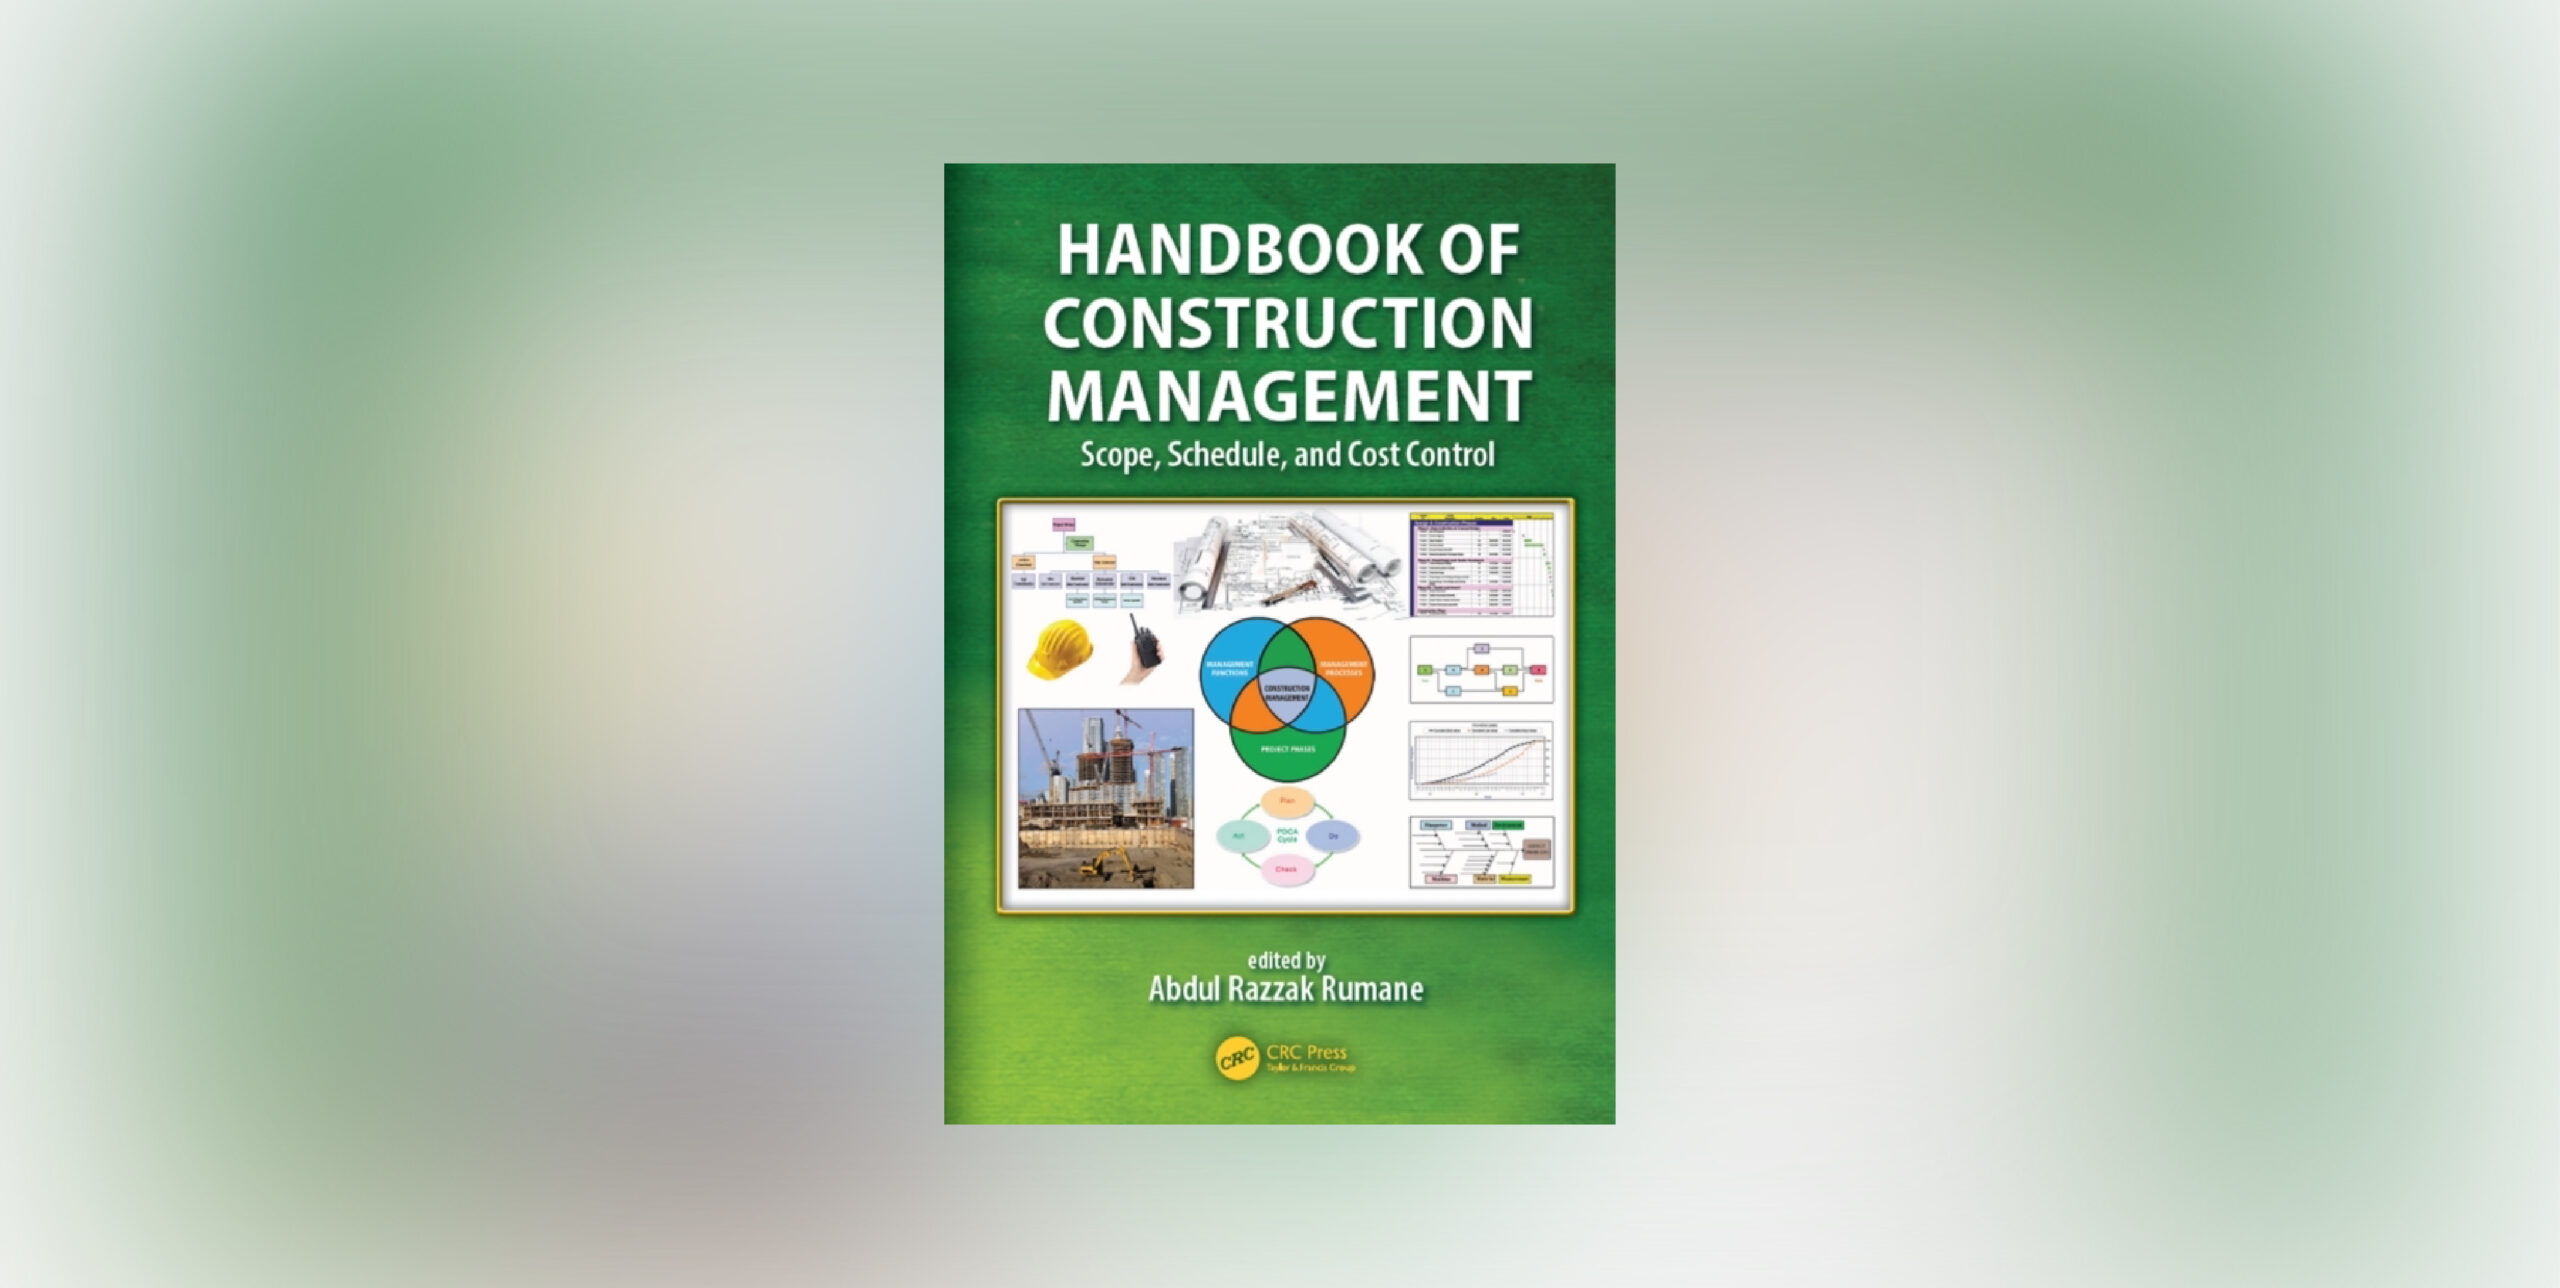 Handbook of construction book on green background